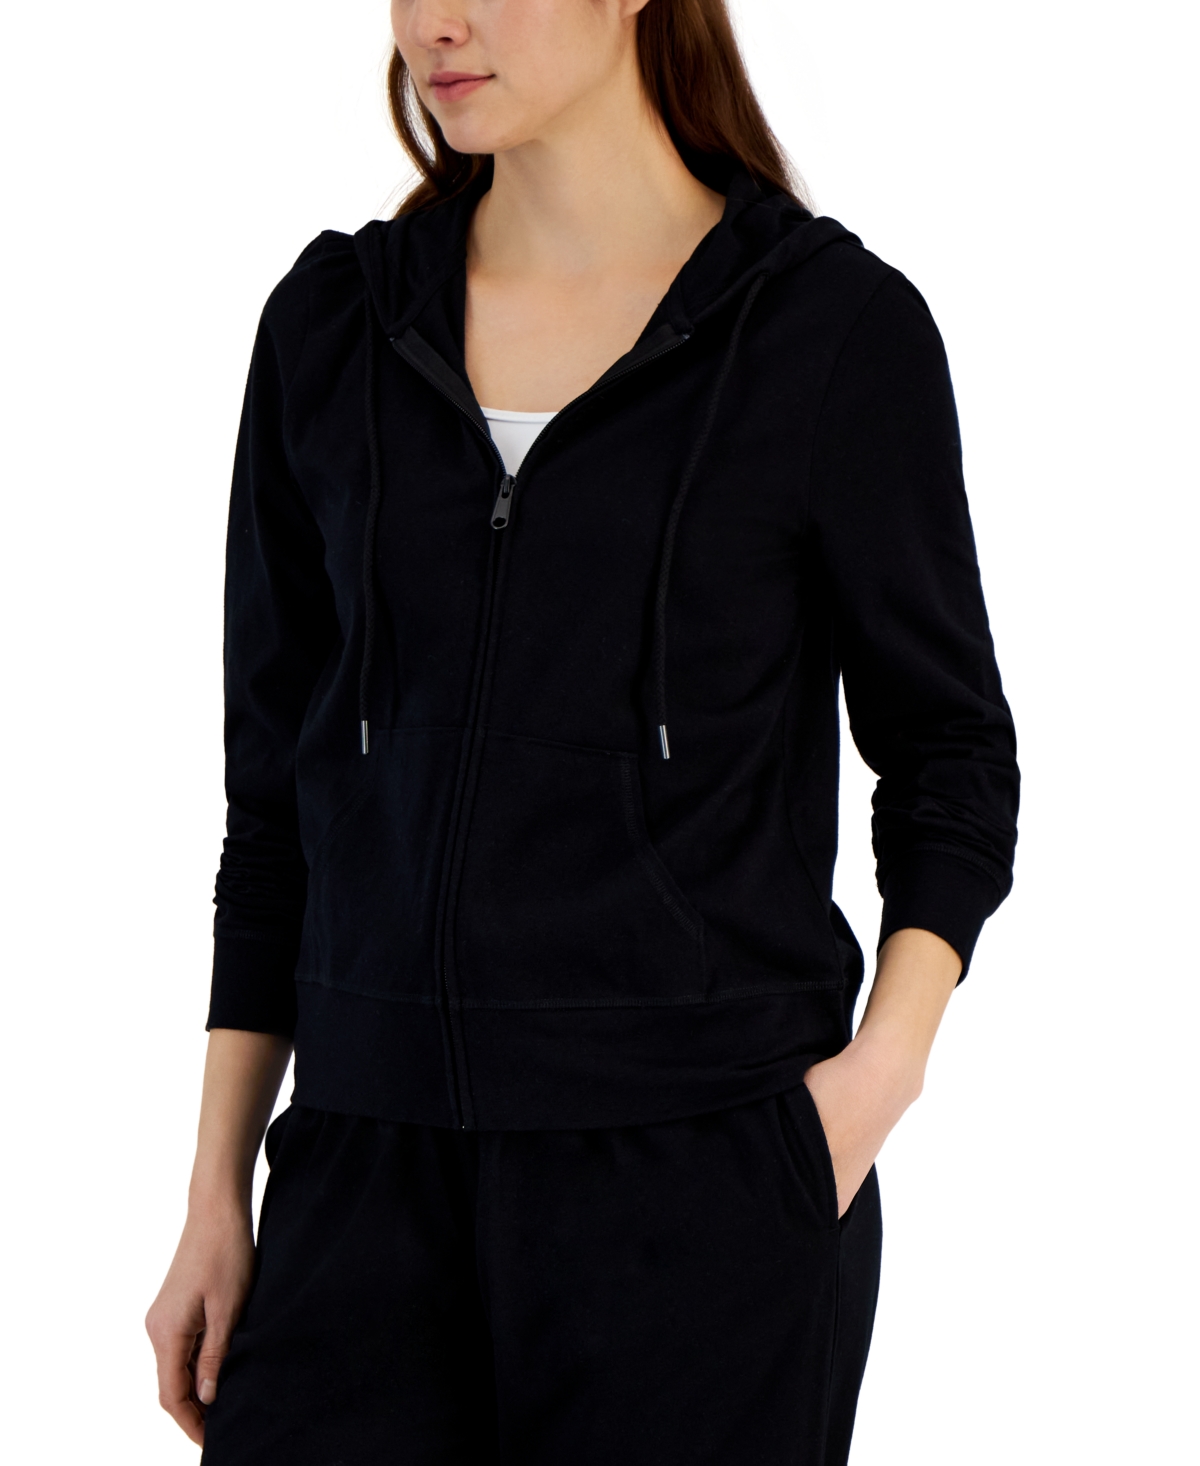 Women's Retro Recycled Full Zip Jacket, Created for Macy's - Grey Whisper Heather